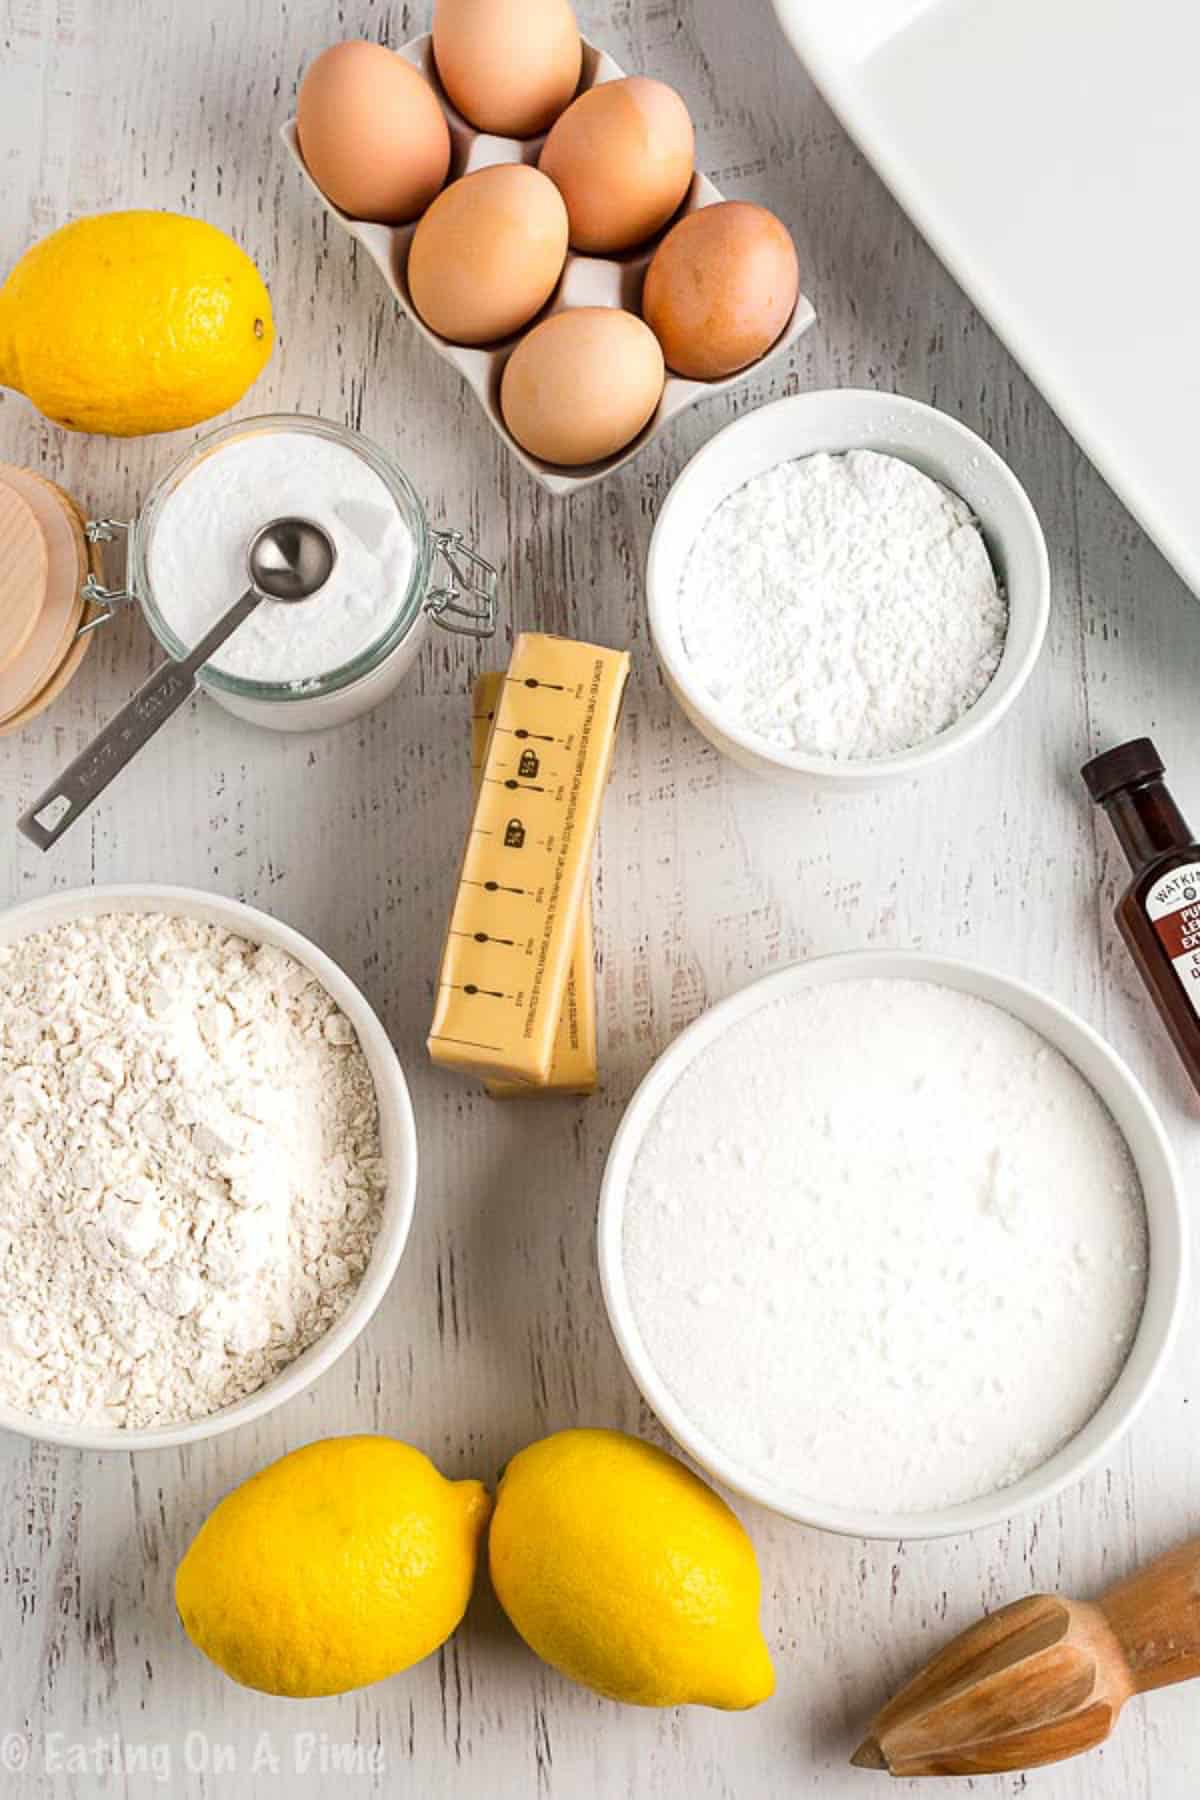 Ingredients for Lemon Bars - Powdered sugar, butter, flour, sugar, eggs, lemon juice, lemon extract, baking powder